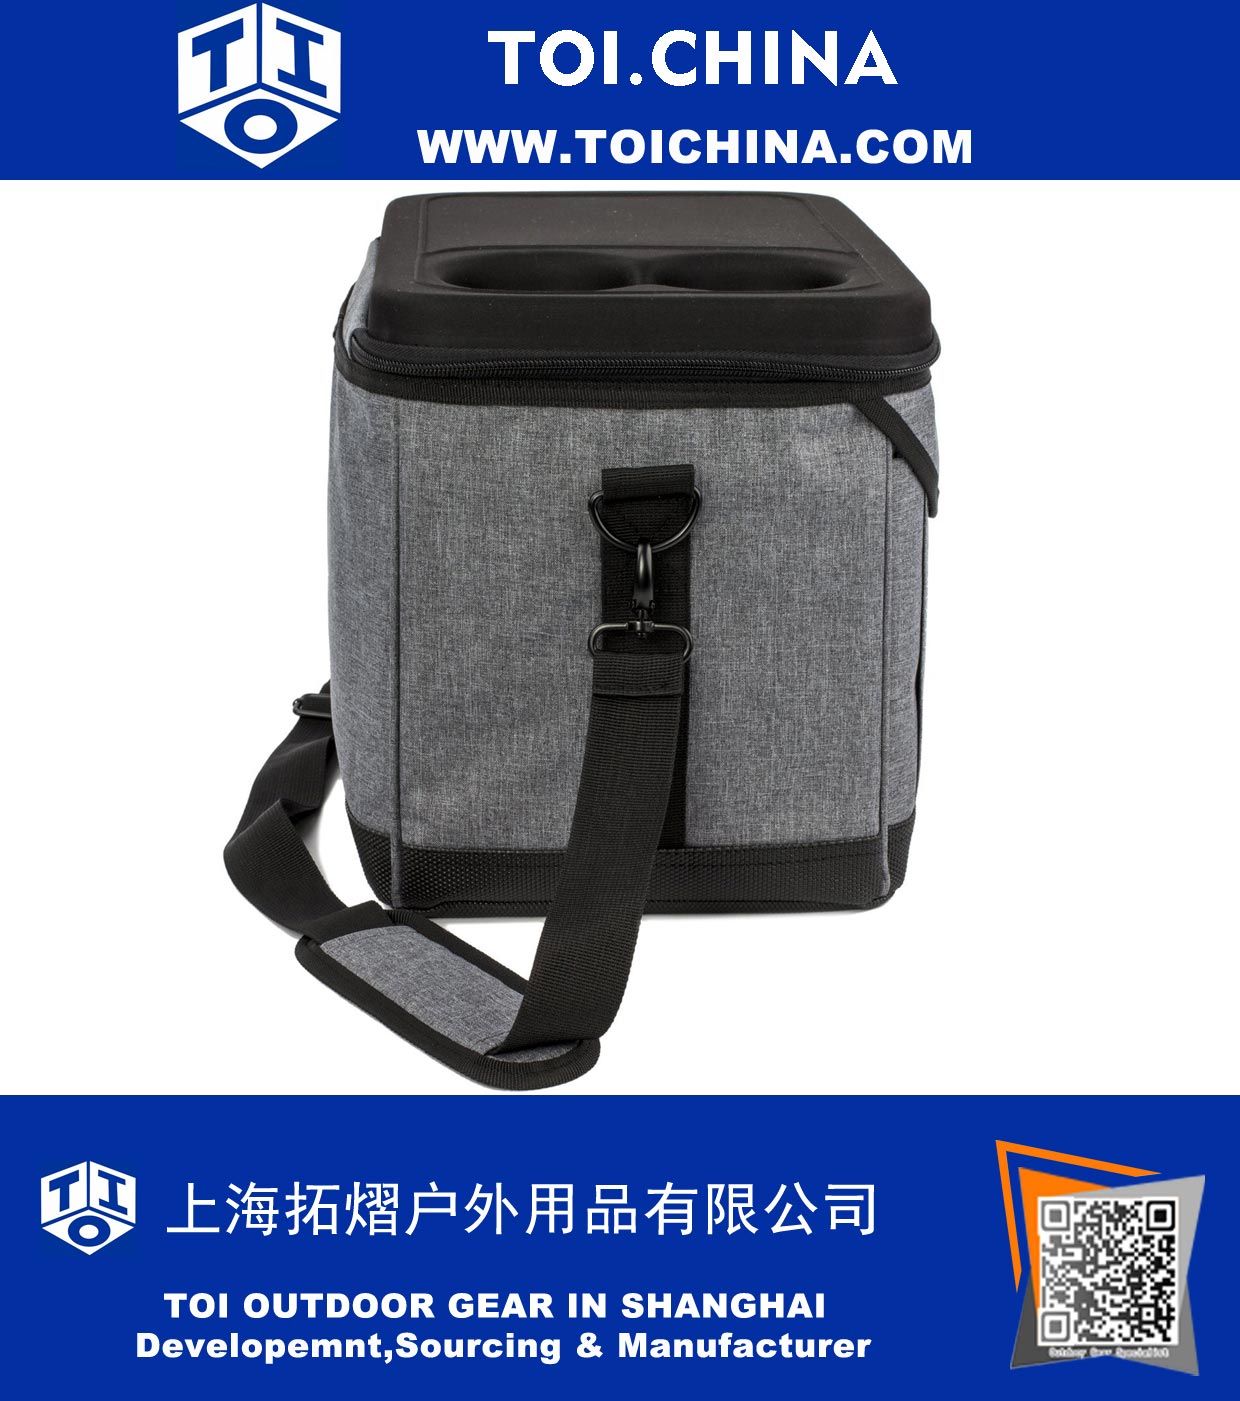 Insulated Meal COOLER BAG 22L Management